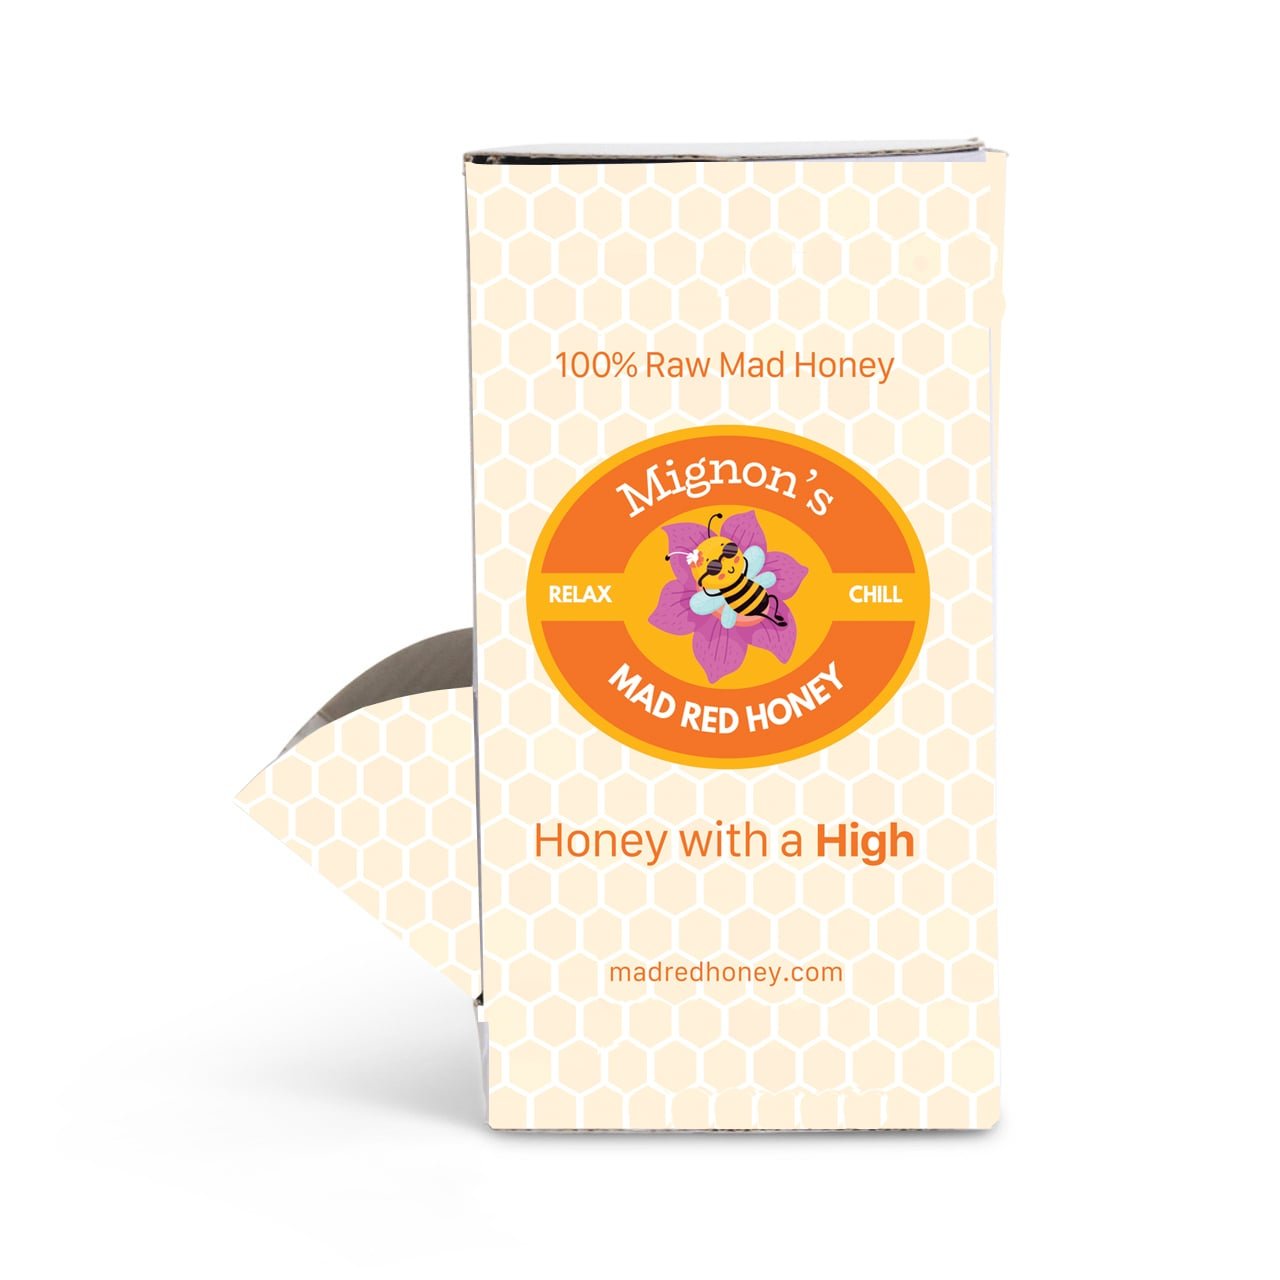 Mad Red Honey Gravity Feed Display Box - Naturally Mignon CBD